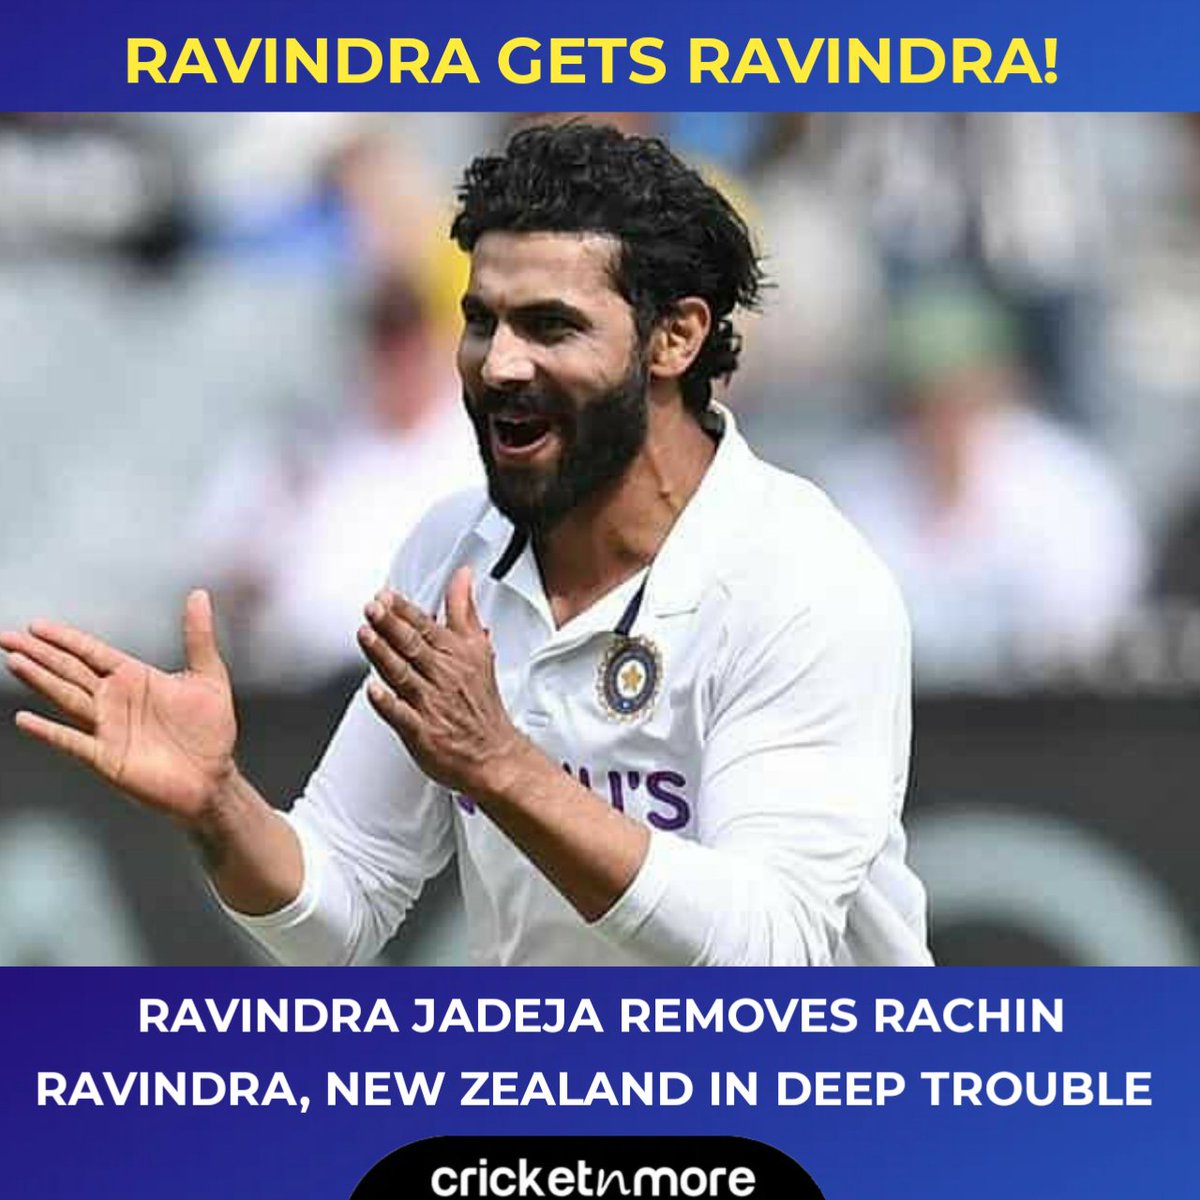 New Zealand 6 Down!!
.
.
#Cricket #indiancricket #teamindia #INDvNZ #RavindraJadeja #rachinravindra